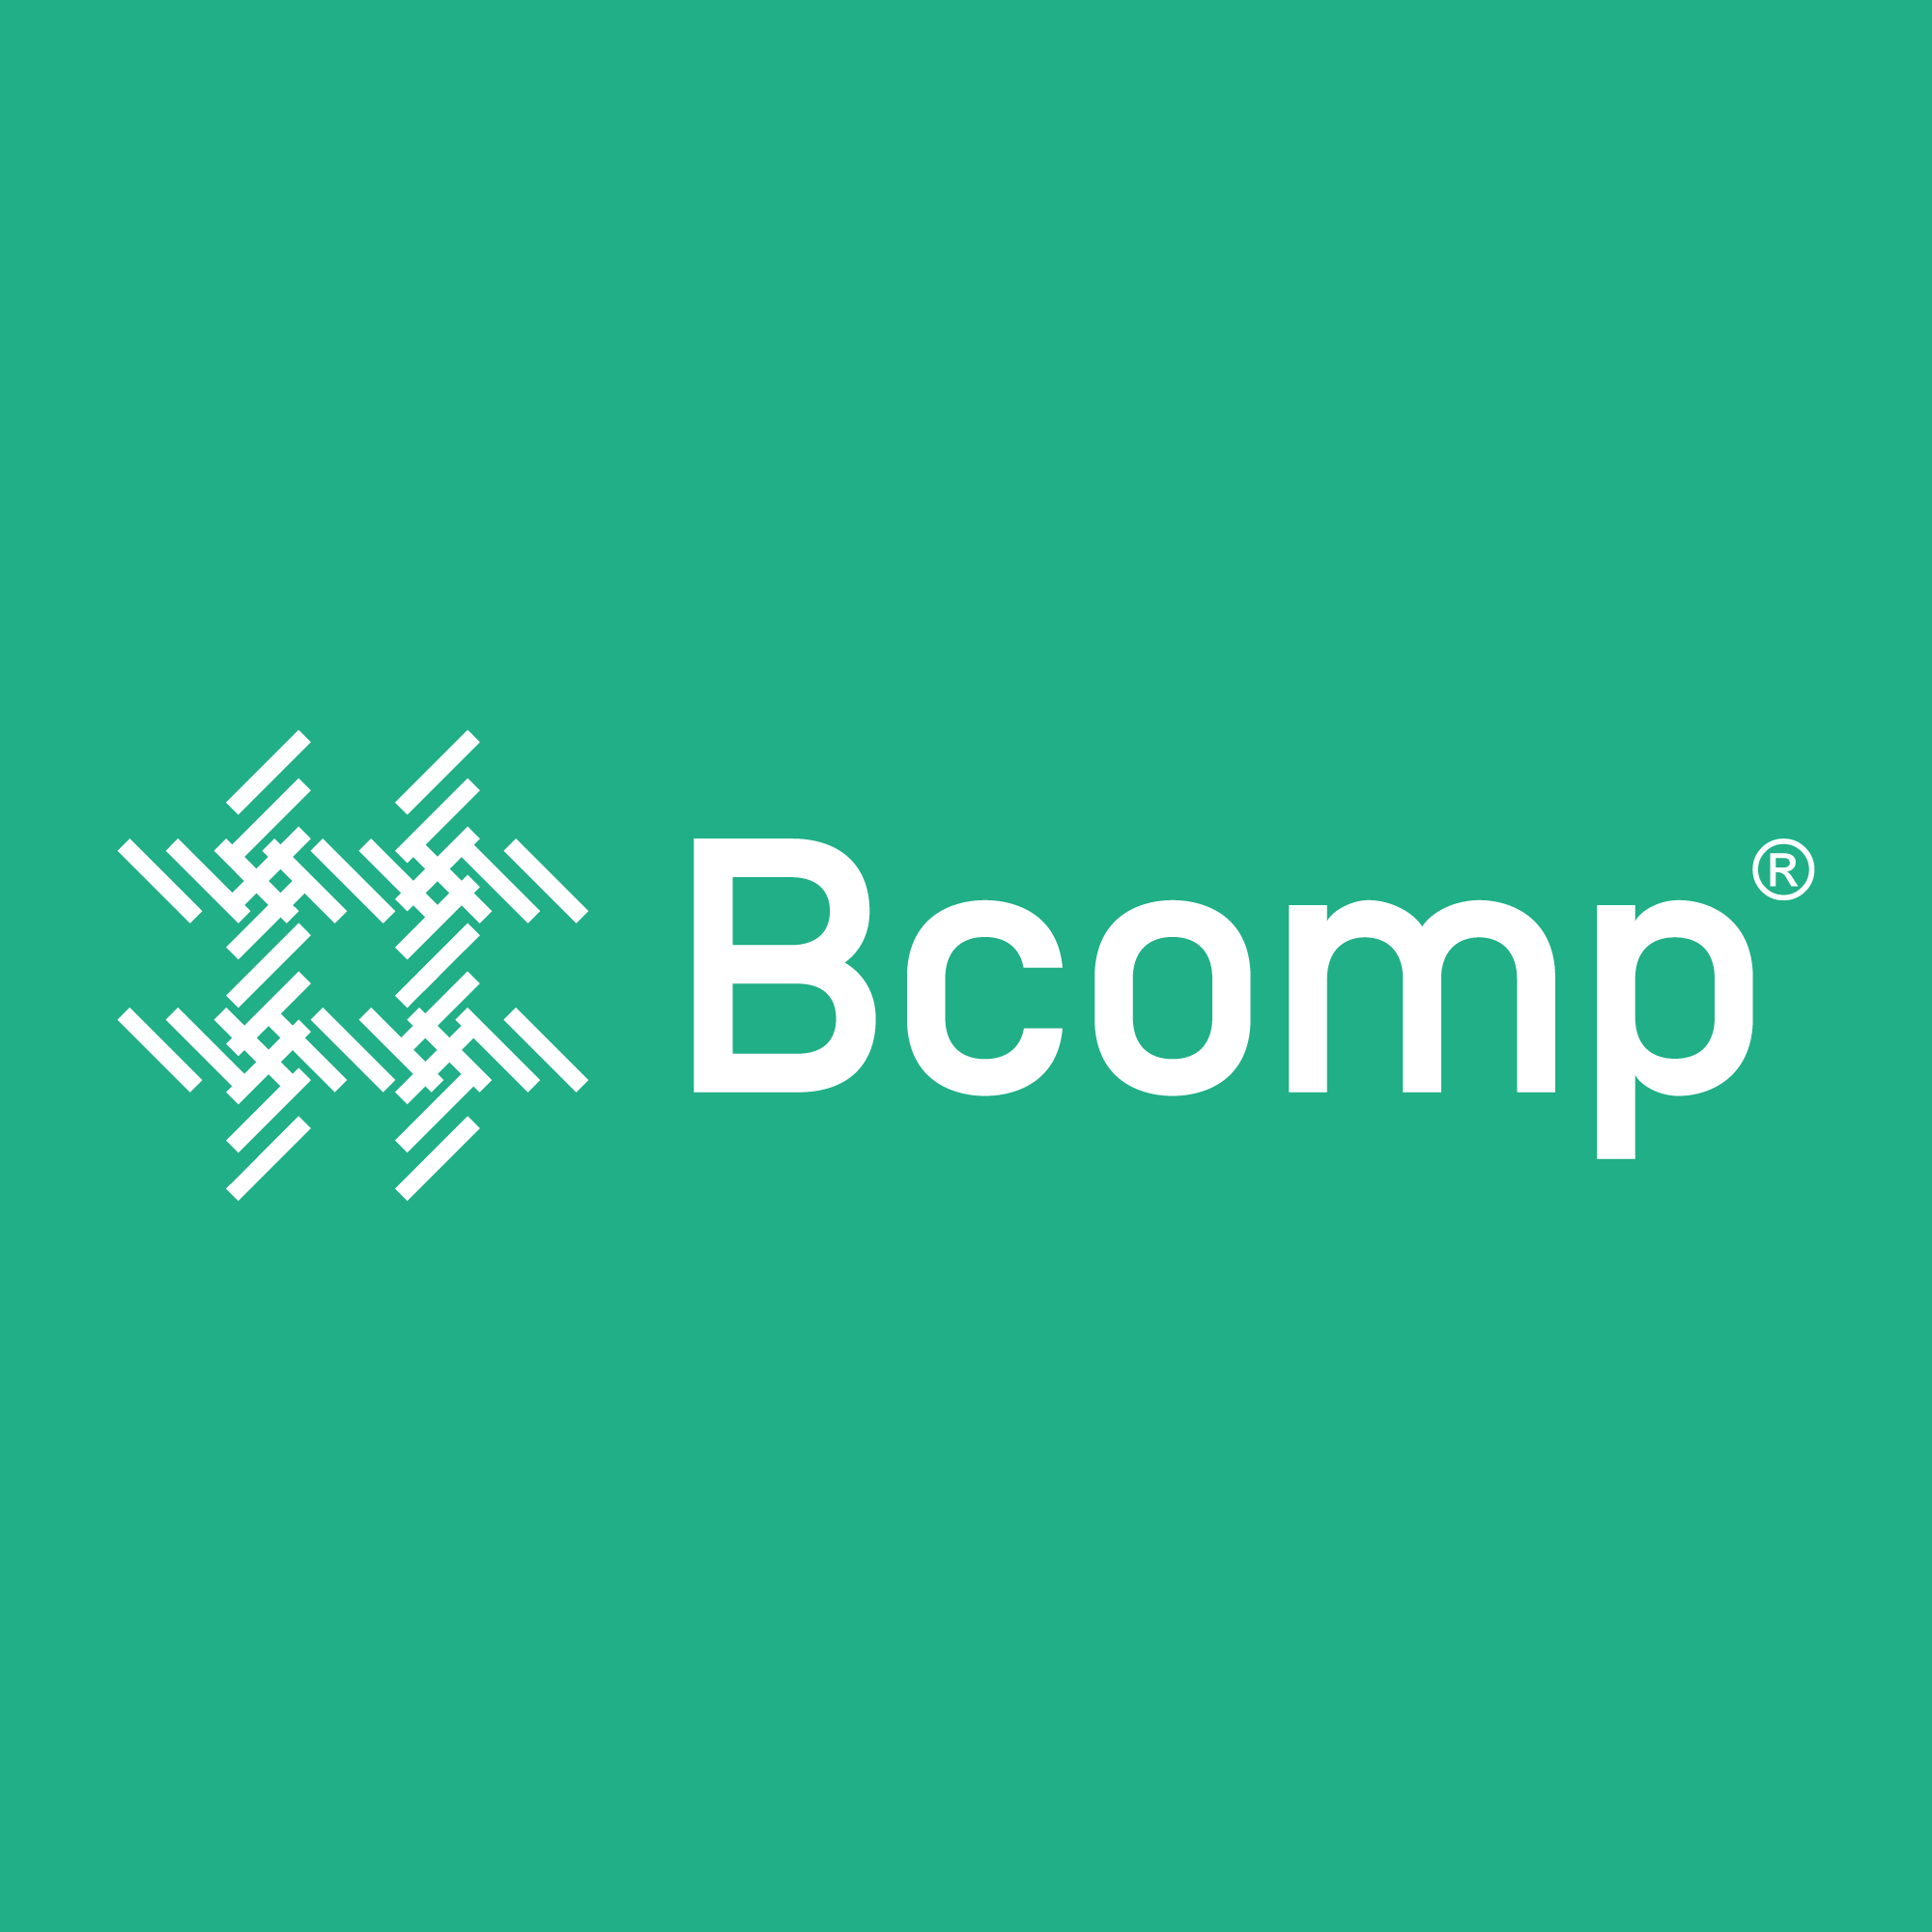 Sport - Bcomp Logo